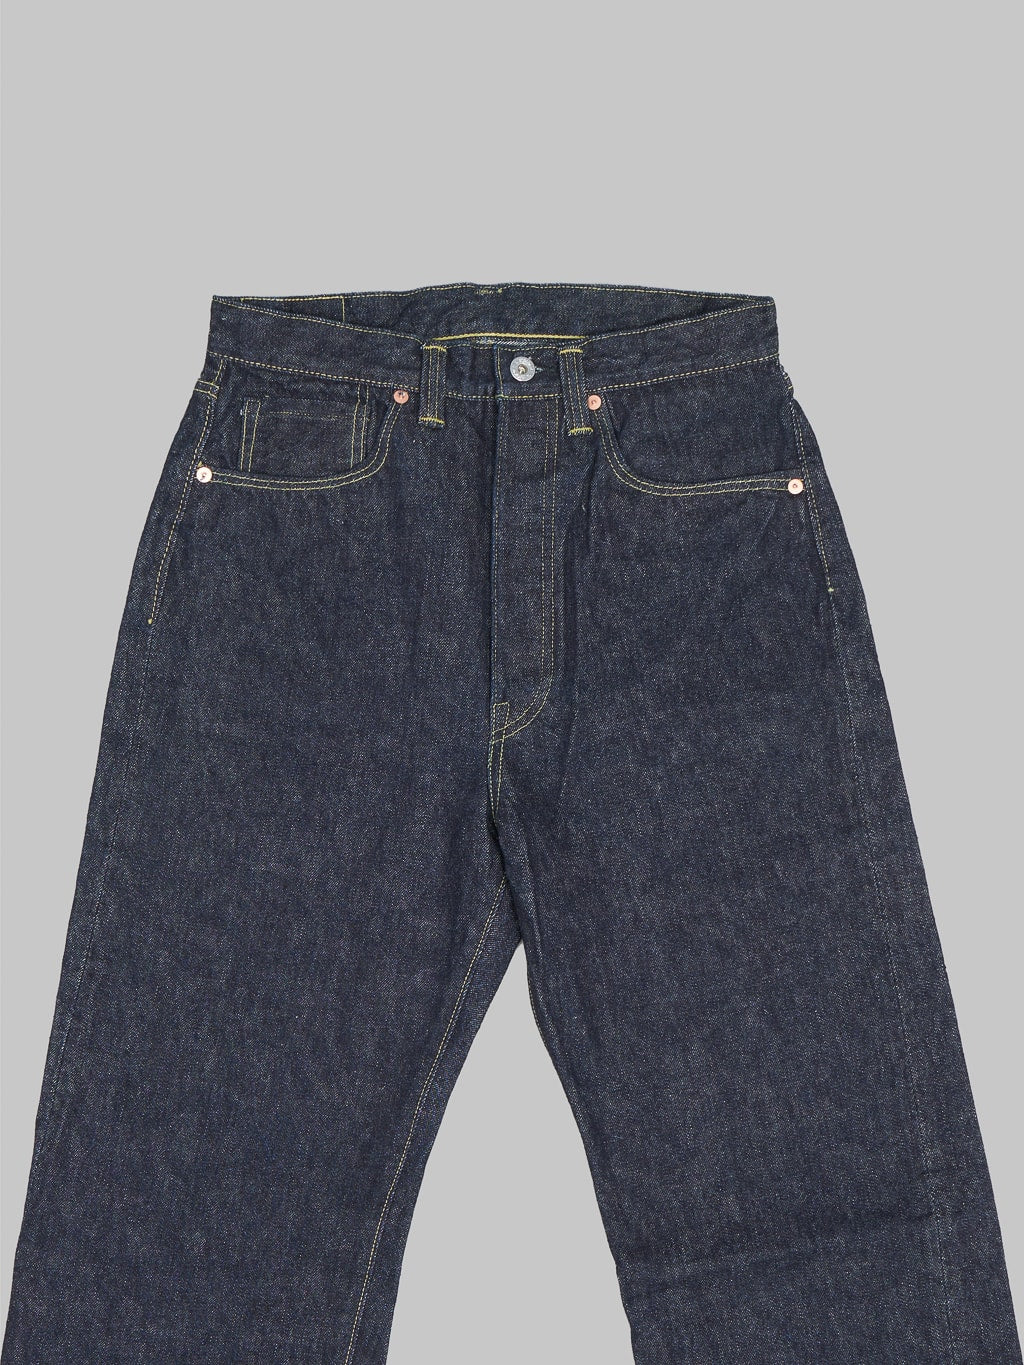 tcb s40s regular straight jeans front waist